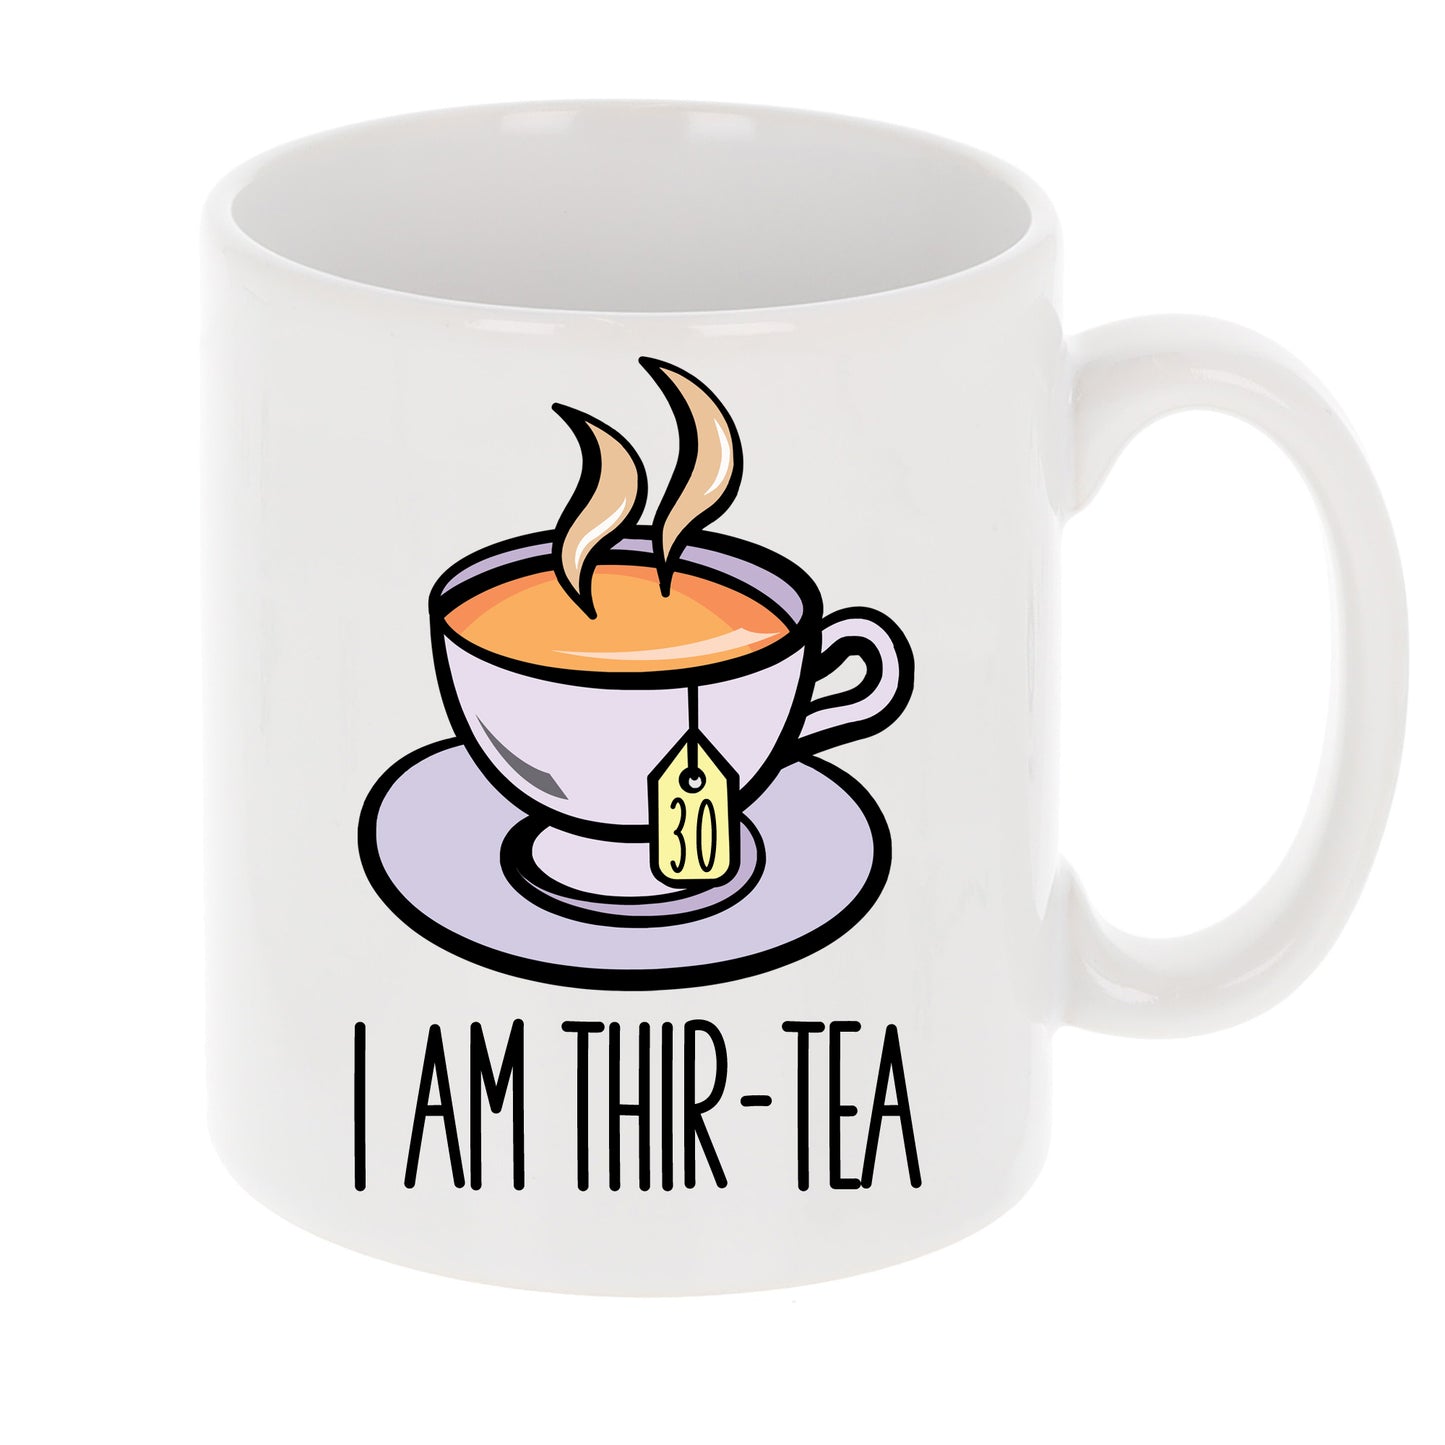 I Am Thir-Tea Funny 30th Birthday Mug Gift for Tea Lovers  - Always Looking Good - Mug Only  